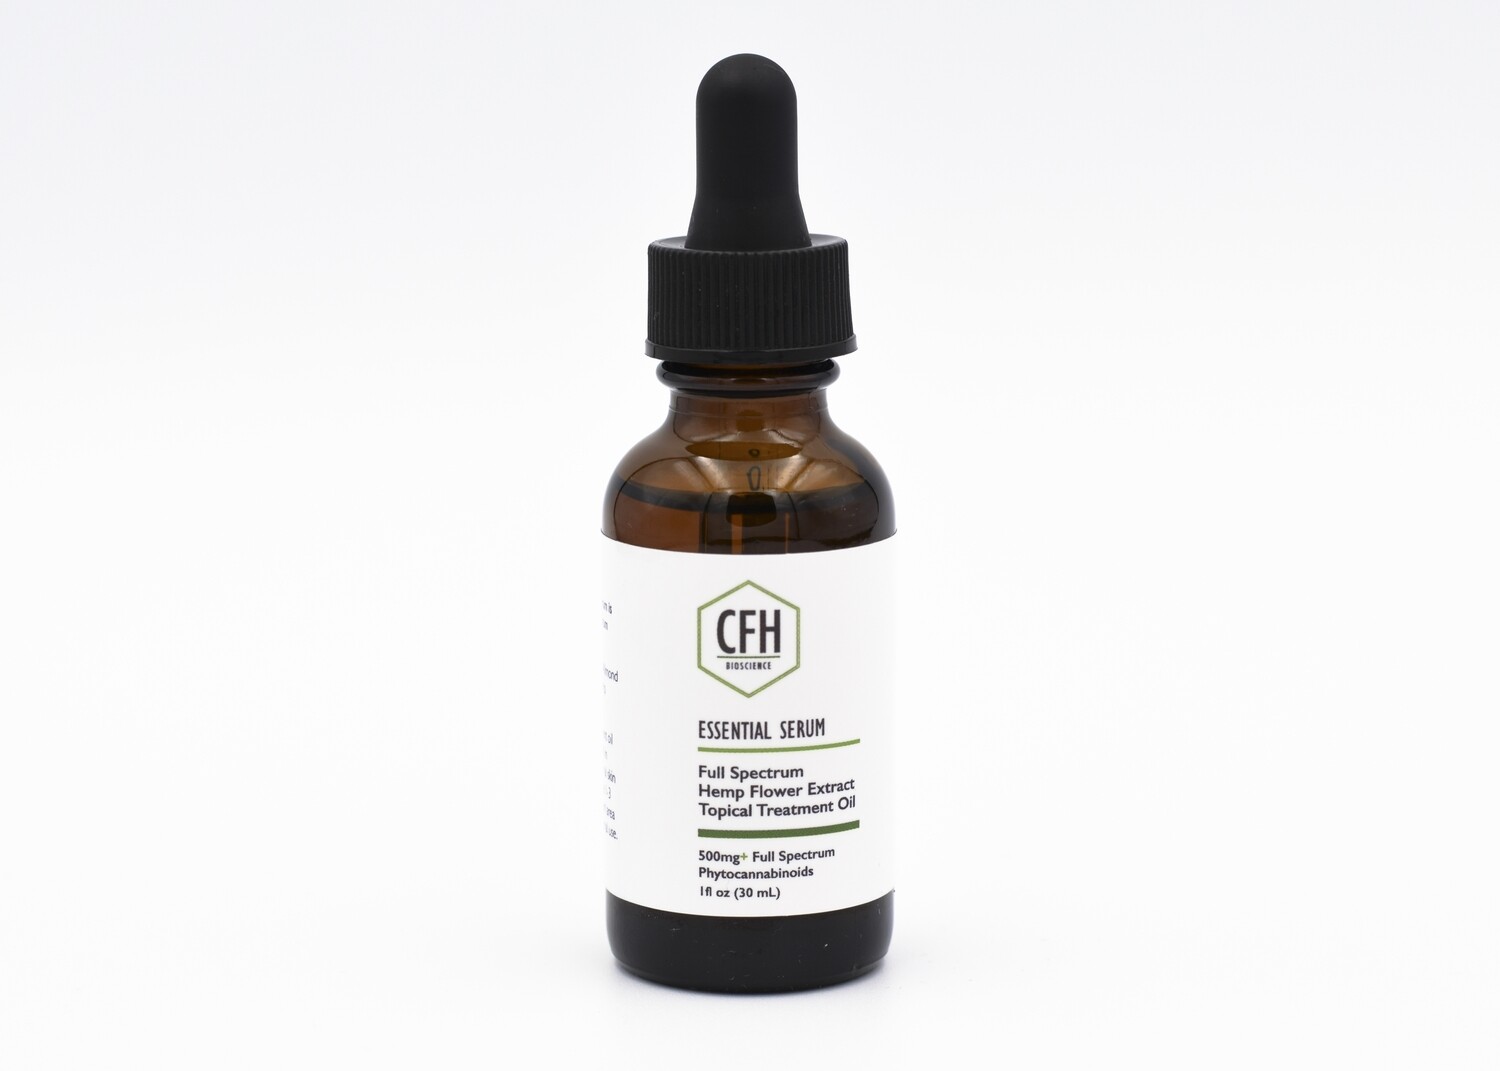 CFH Essential Serum Treatment Dropper - 500mg